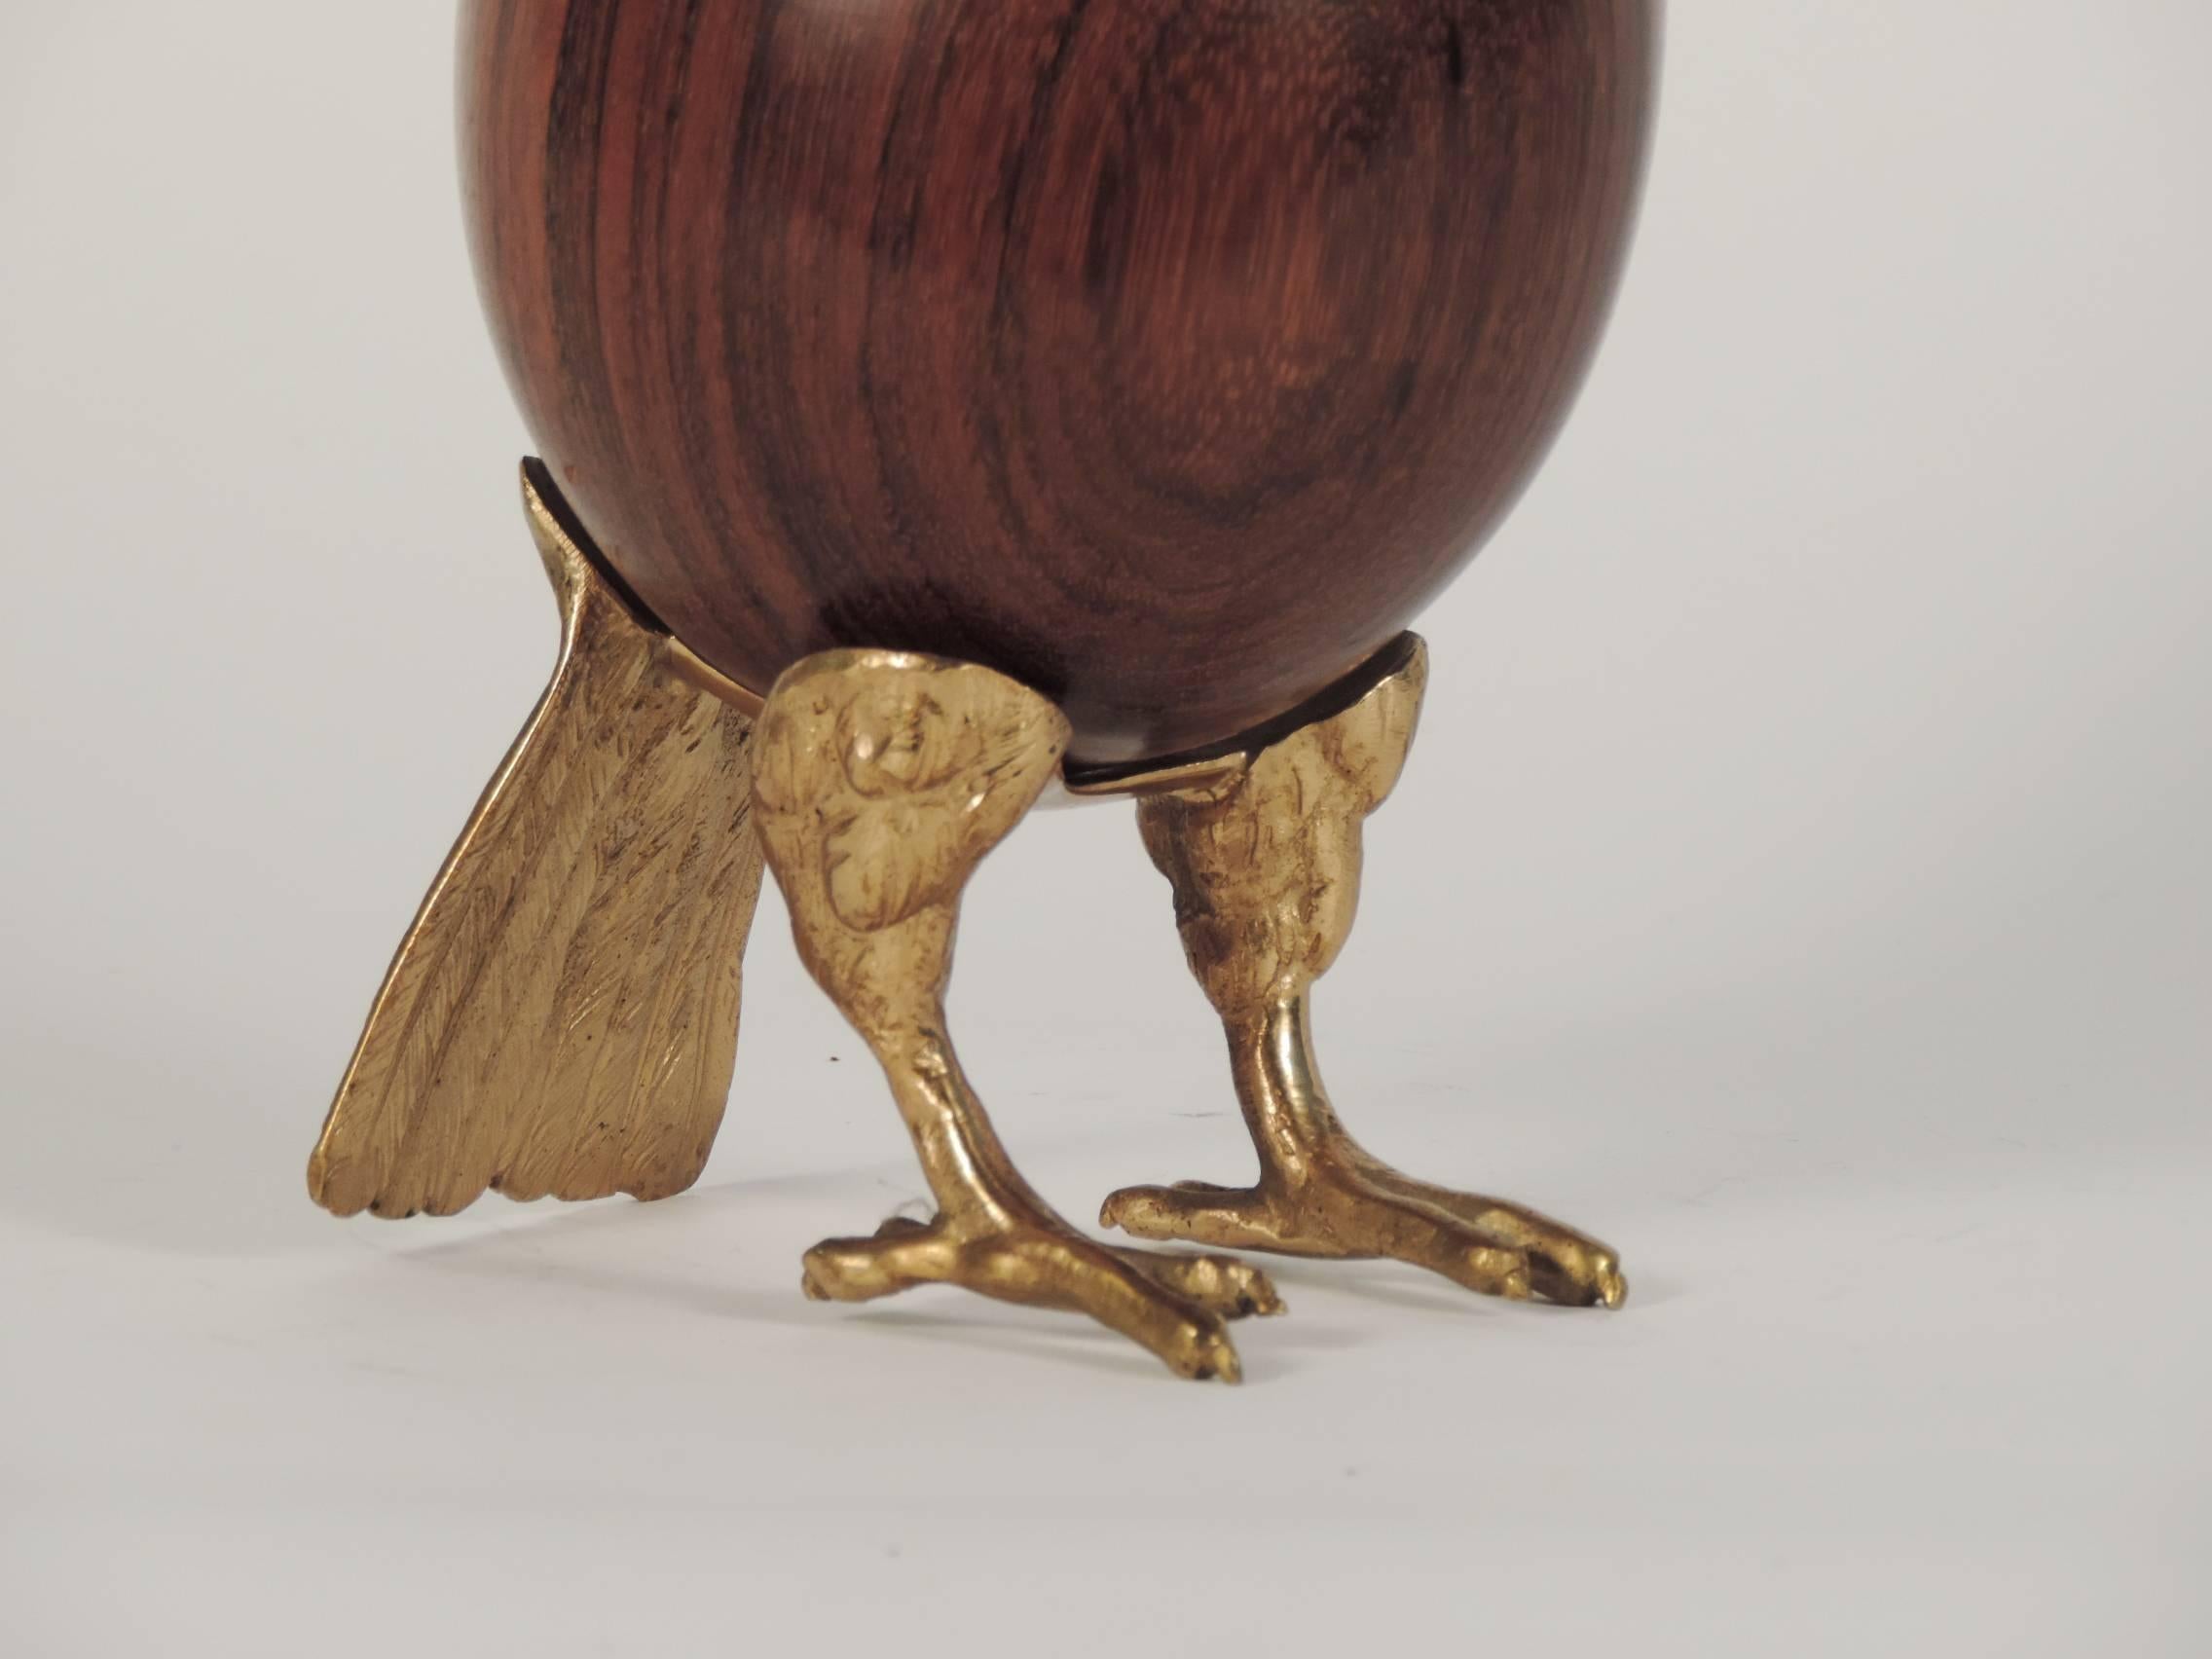 Exceptional Gabriella Crespi 'Parrot' box.
Wood and brass.
Signed Gabriella Crespi.